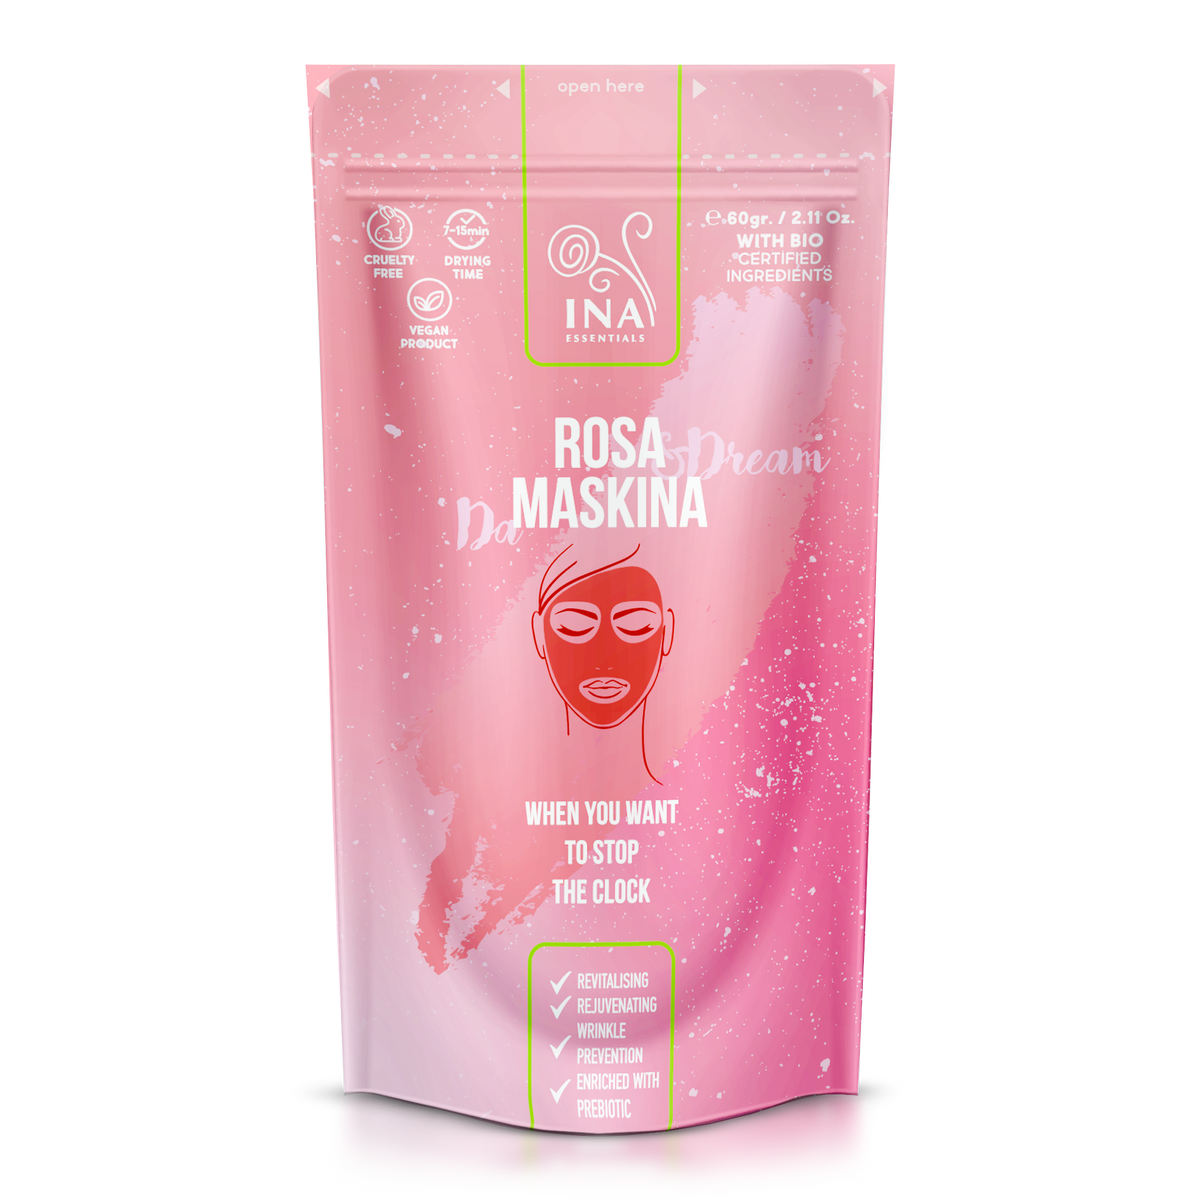 Rose Maskina - for NORMAL to MATURE skin (60g)